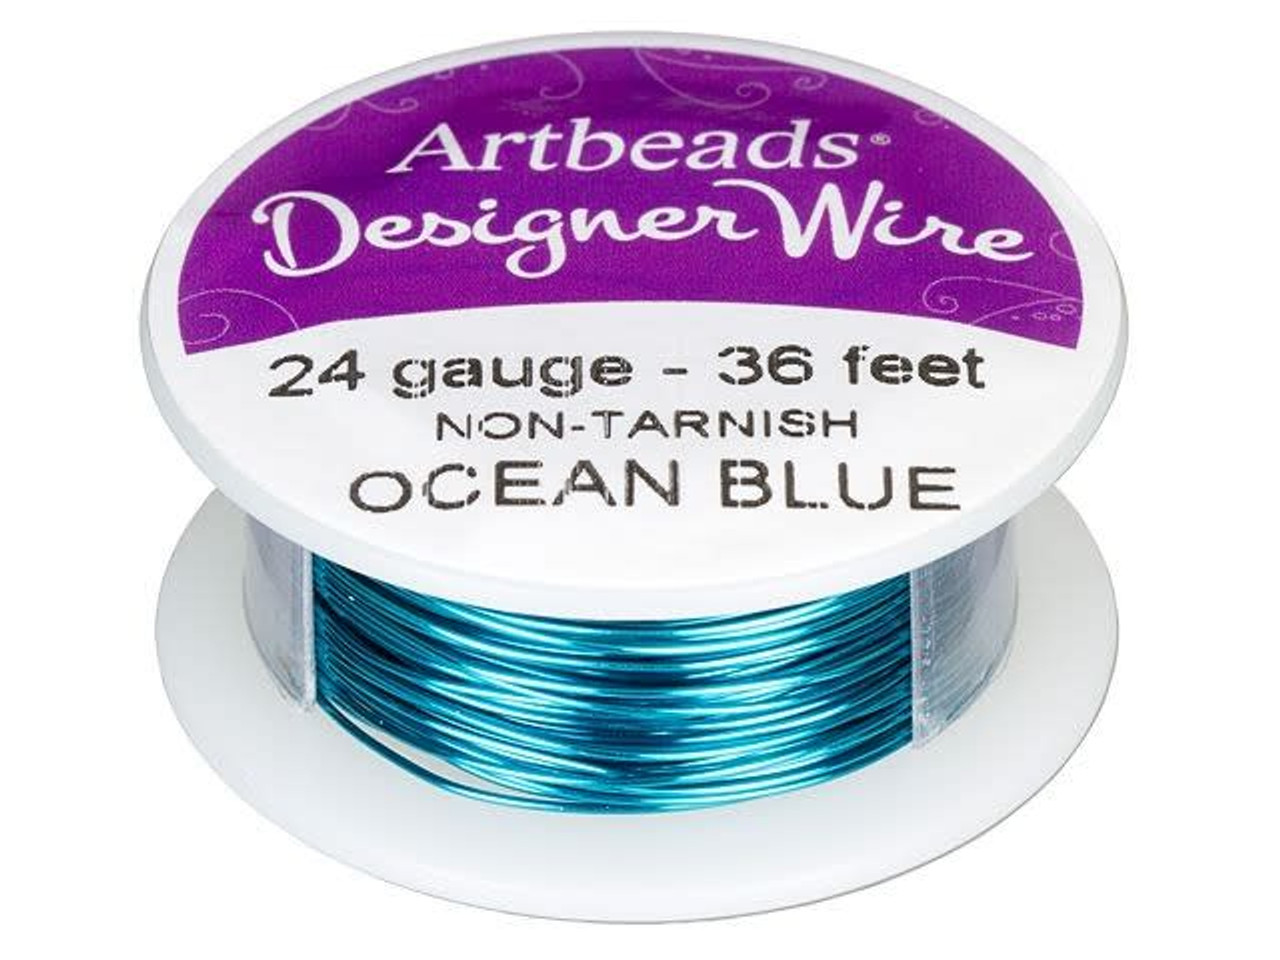 BeadSmith Craft Wire Titanium Color 18, 20, 22, 24, 26, 28 Gauge Wire  Elements